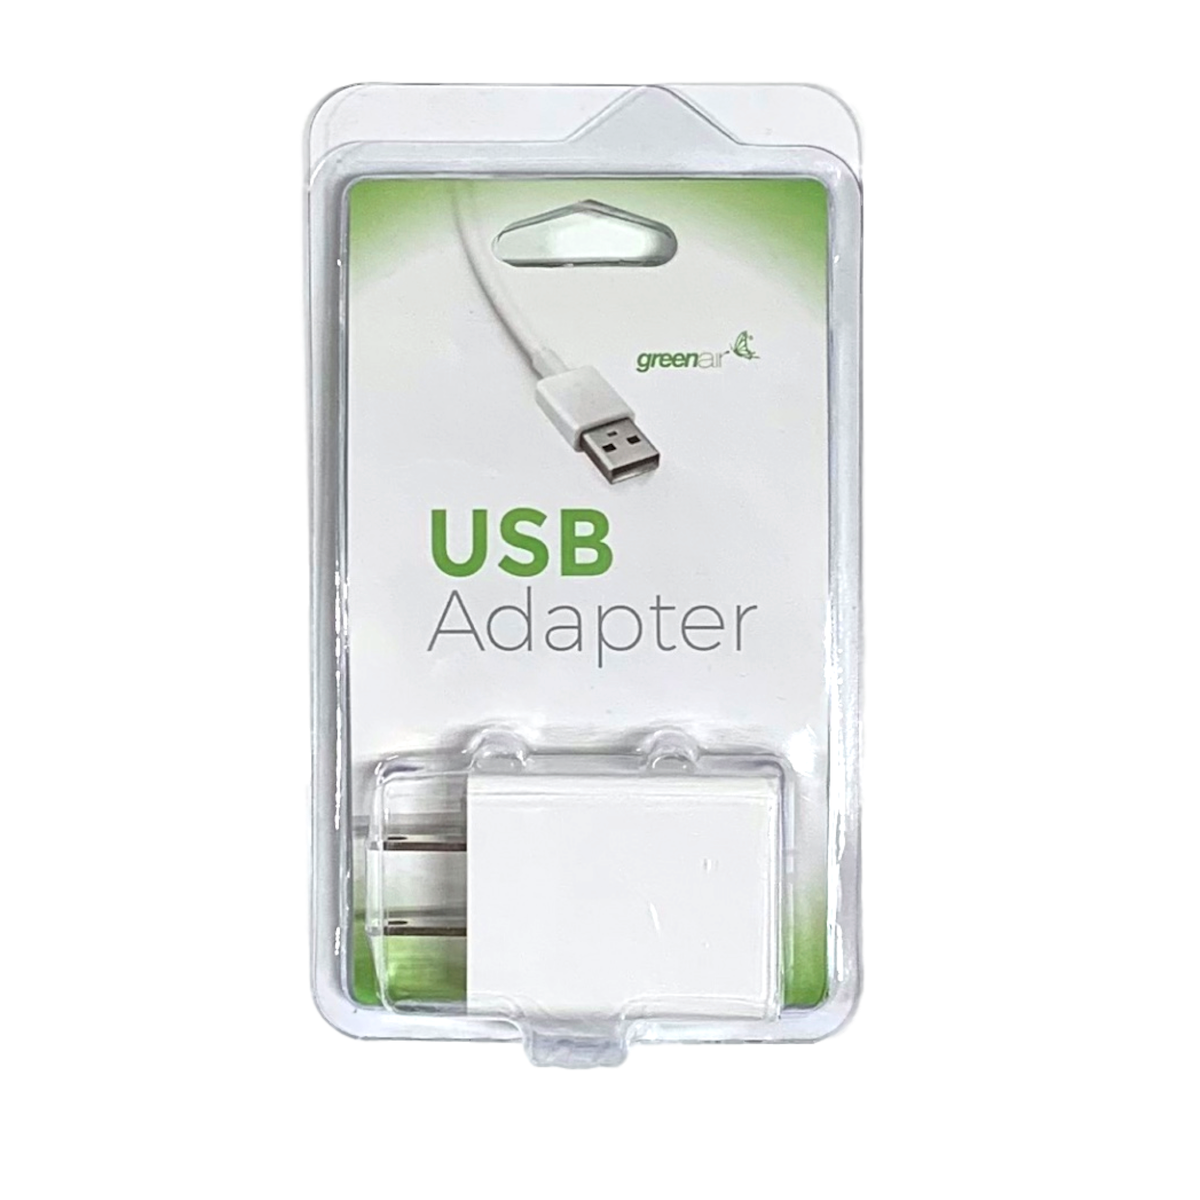 Greenair(R) USB Adapter